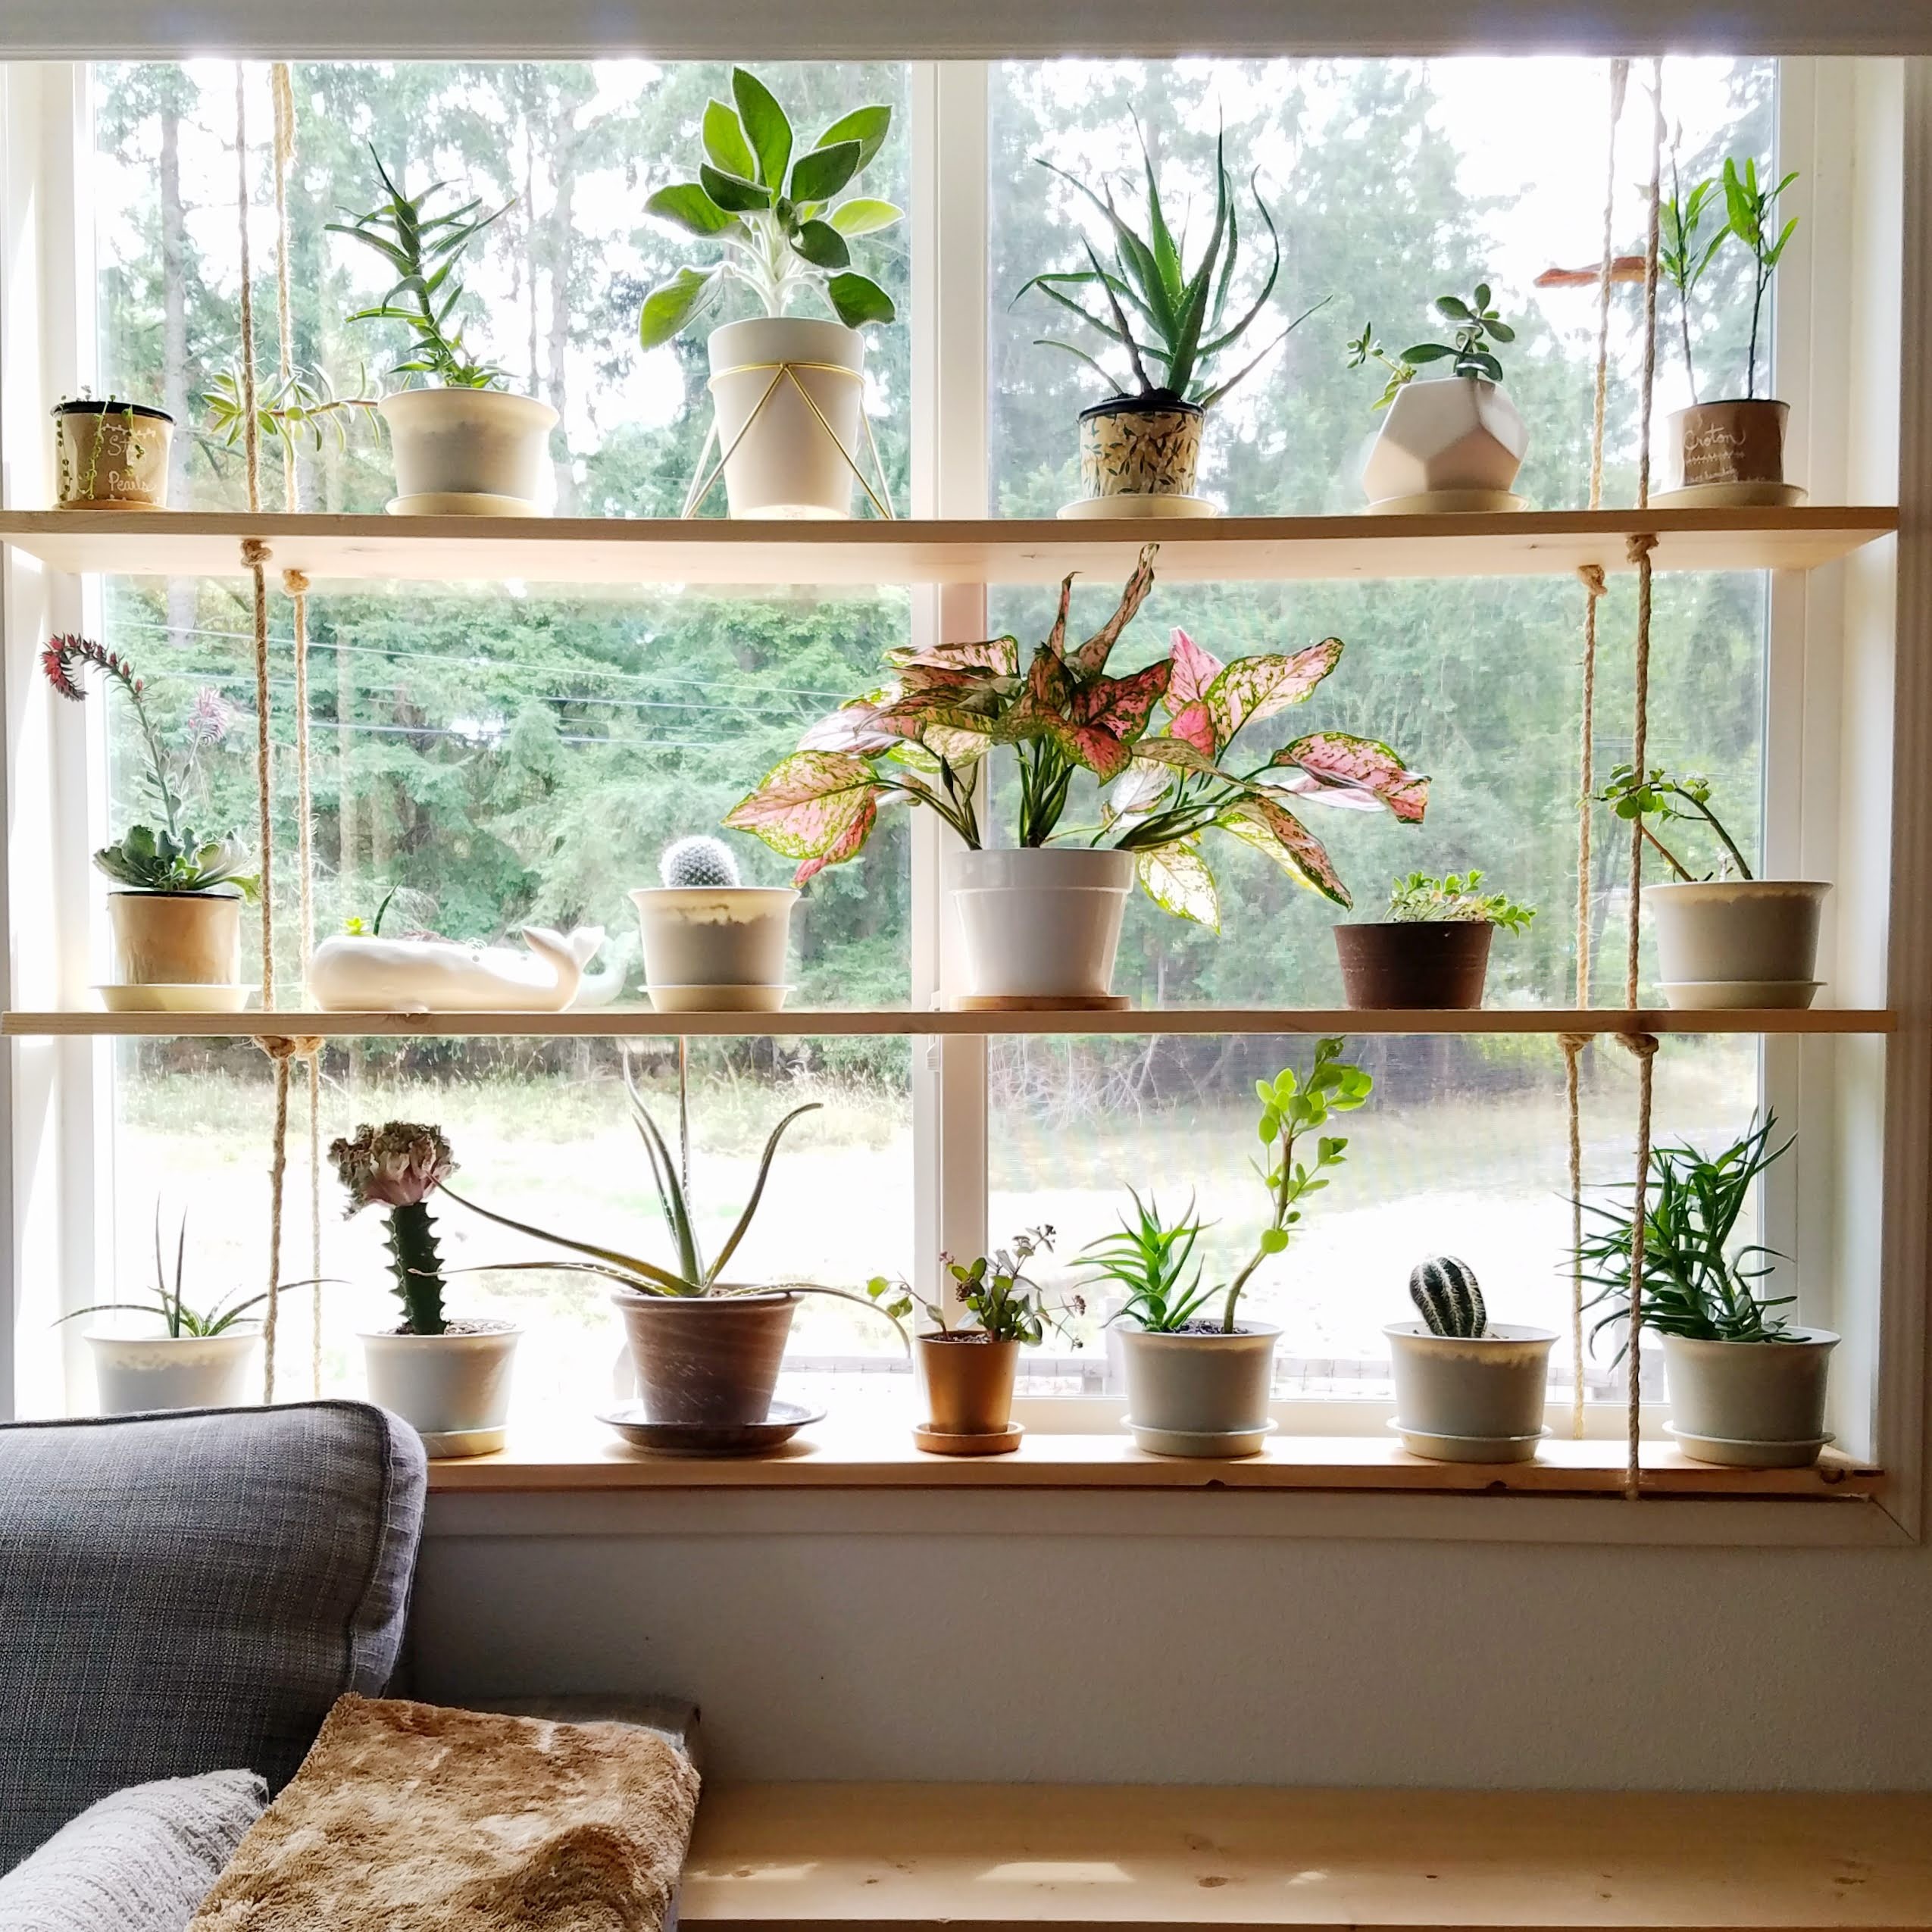 How to make a window hanging plant shelf?